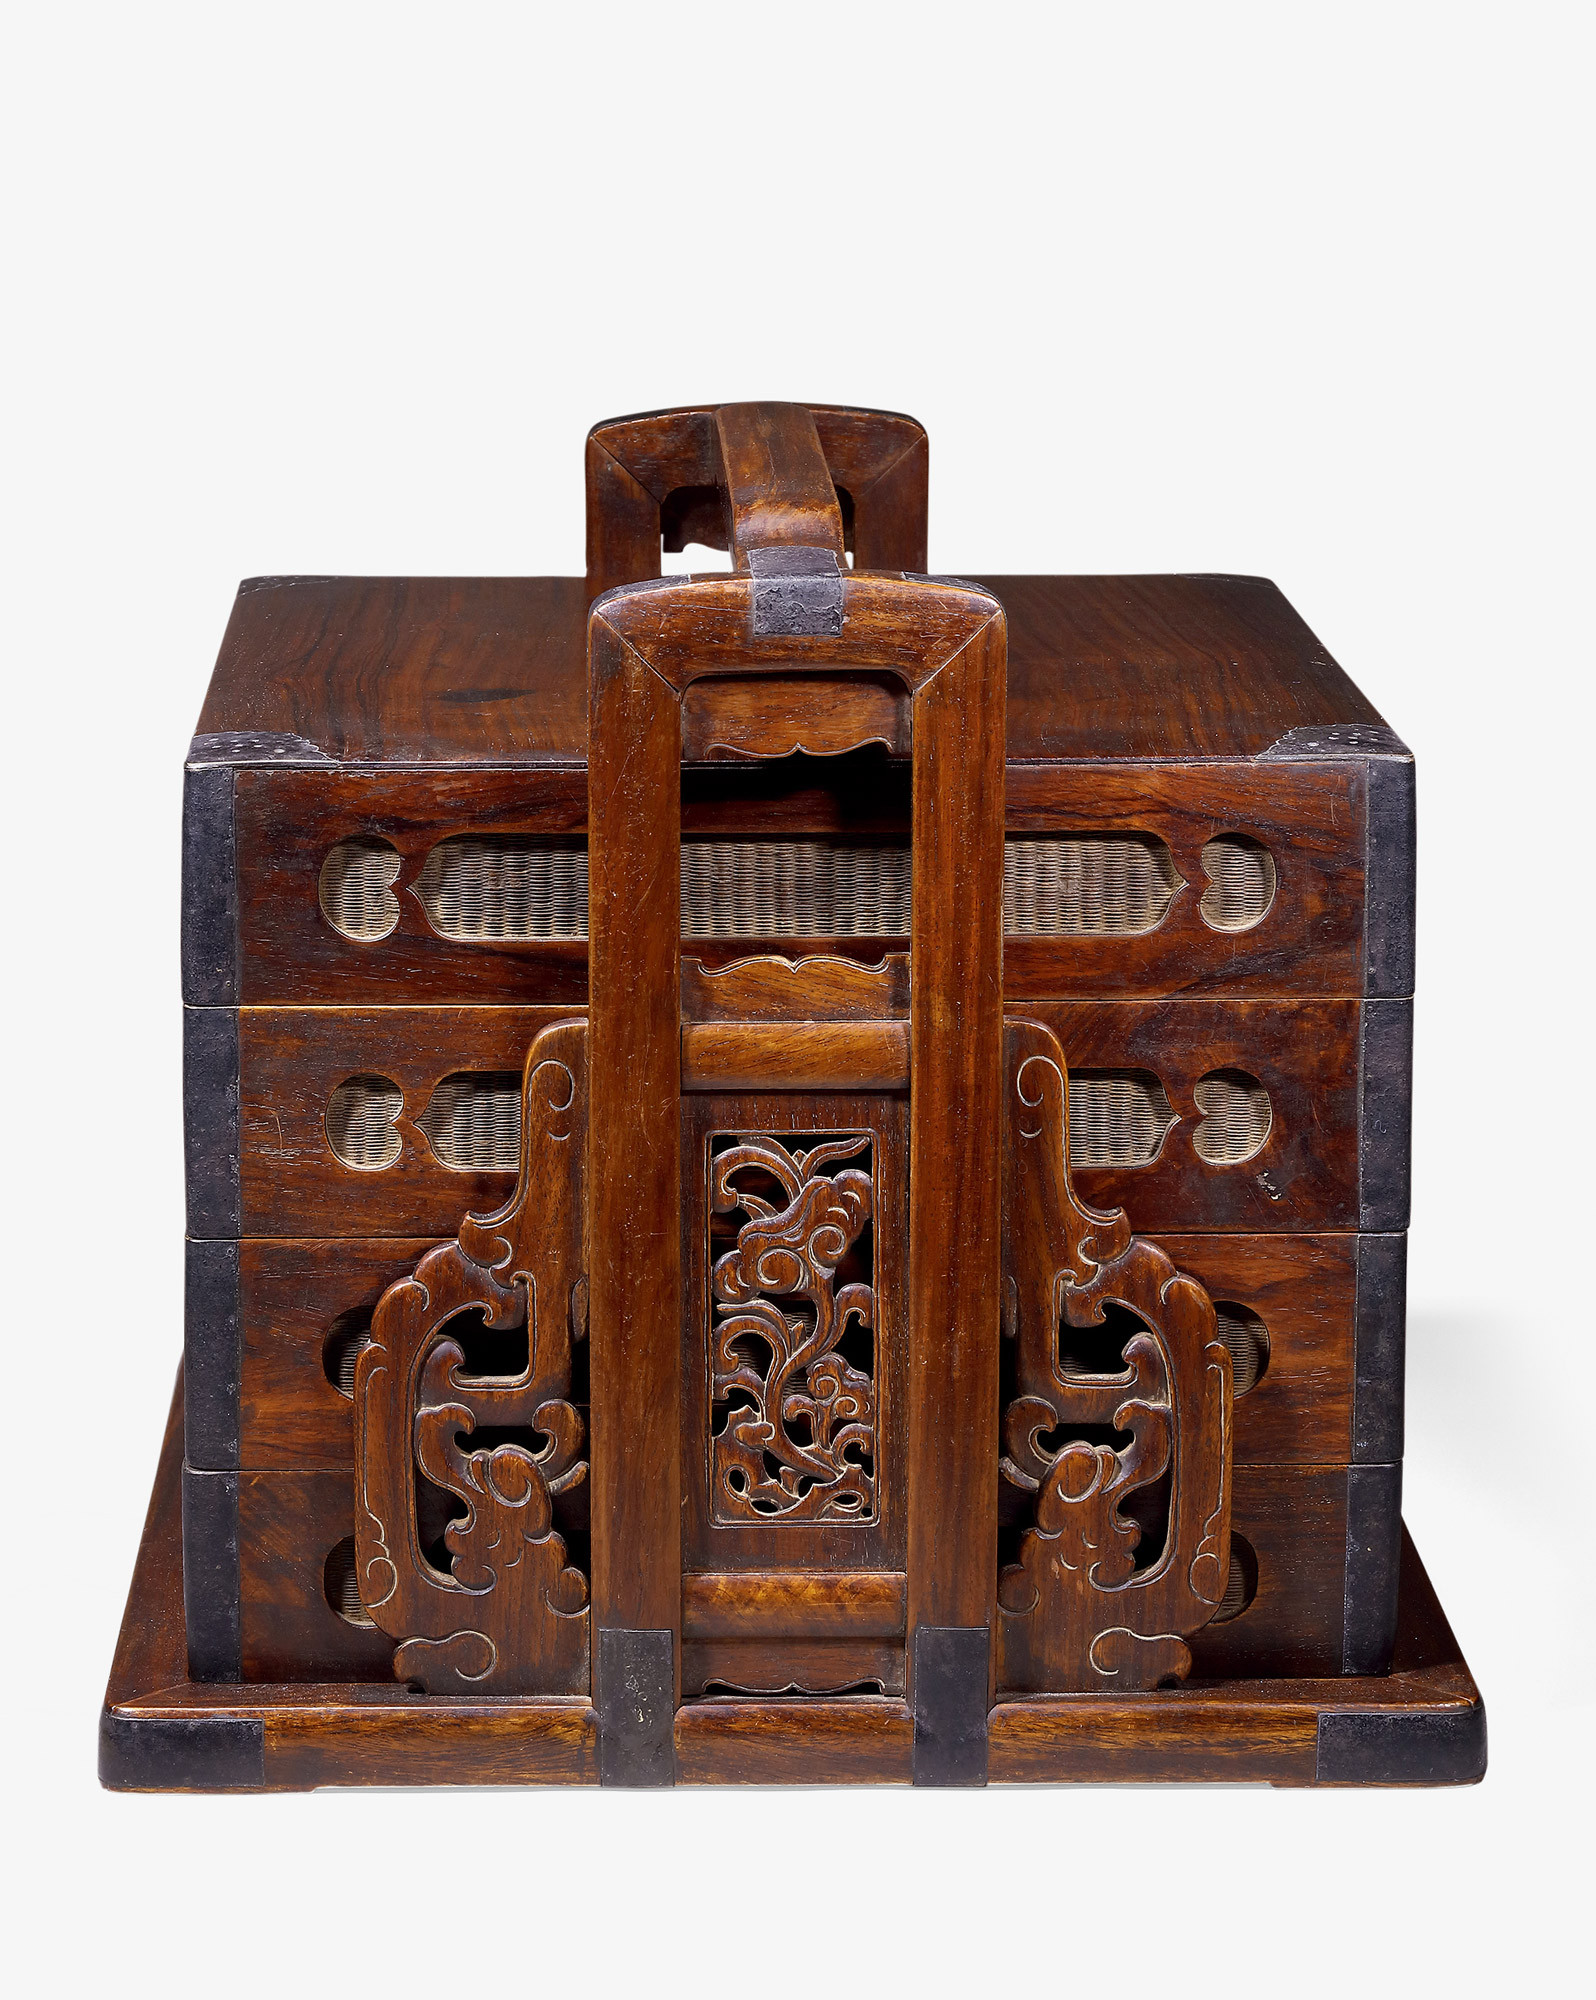 A Huanghuali Carrying Box